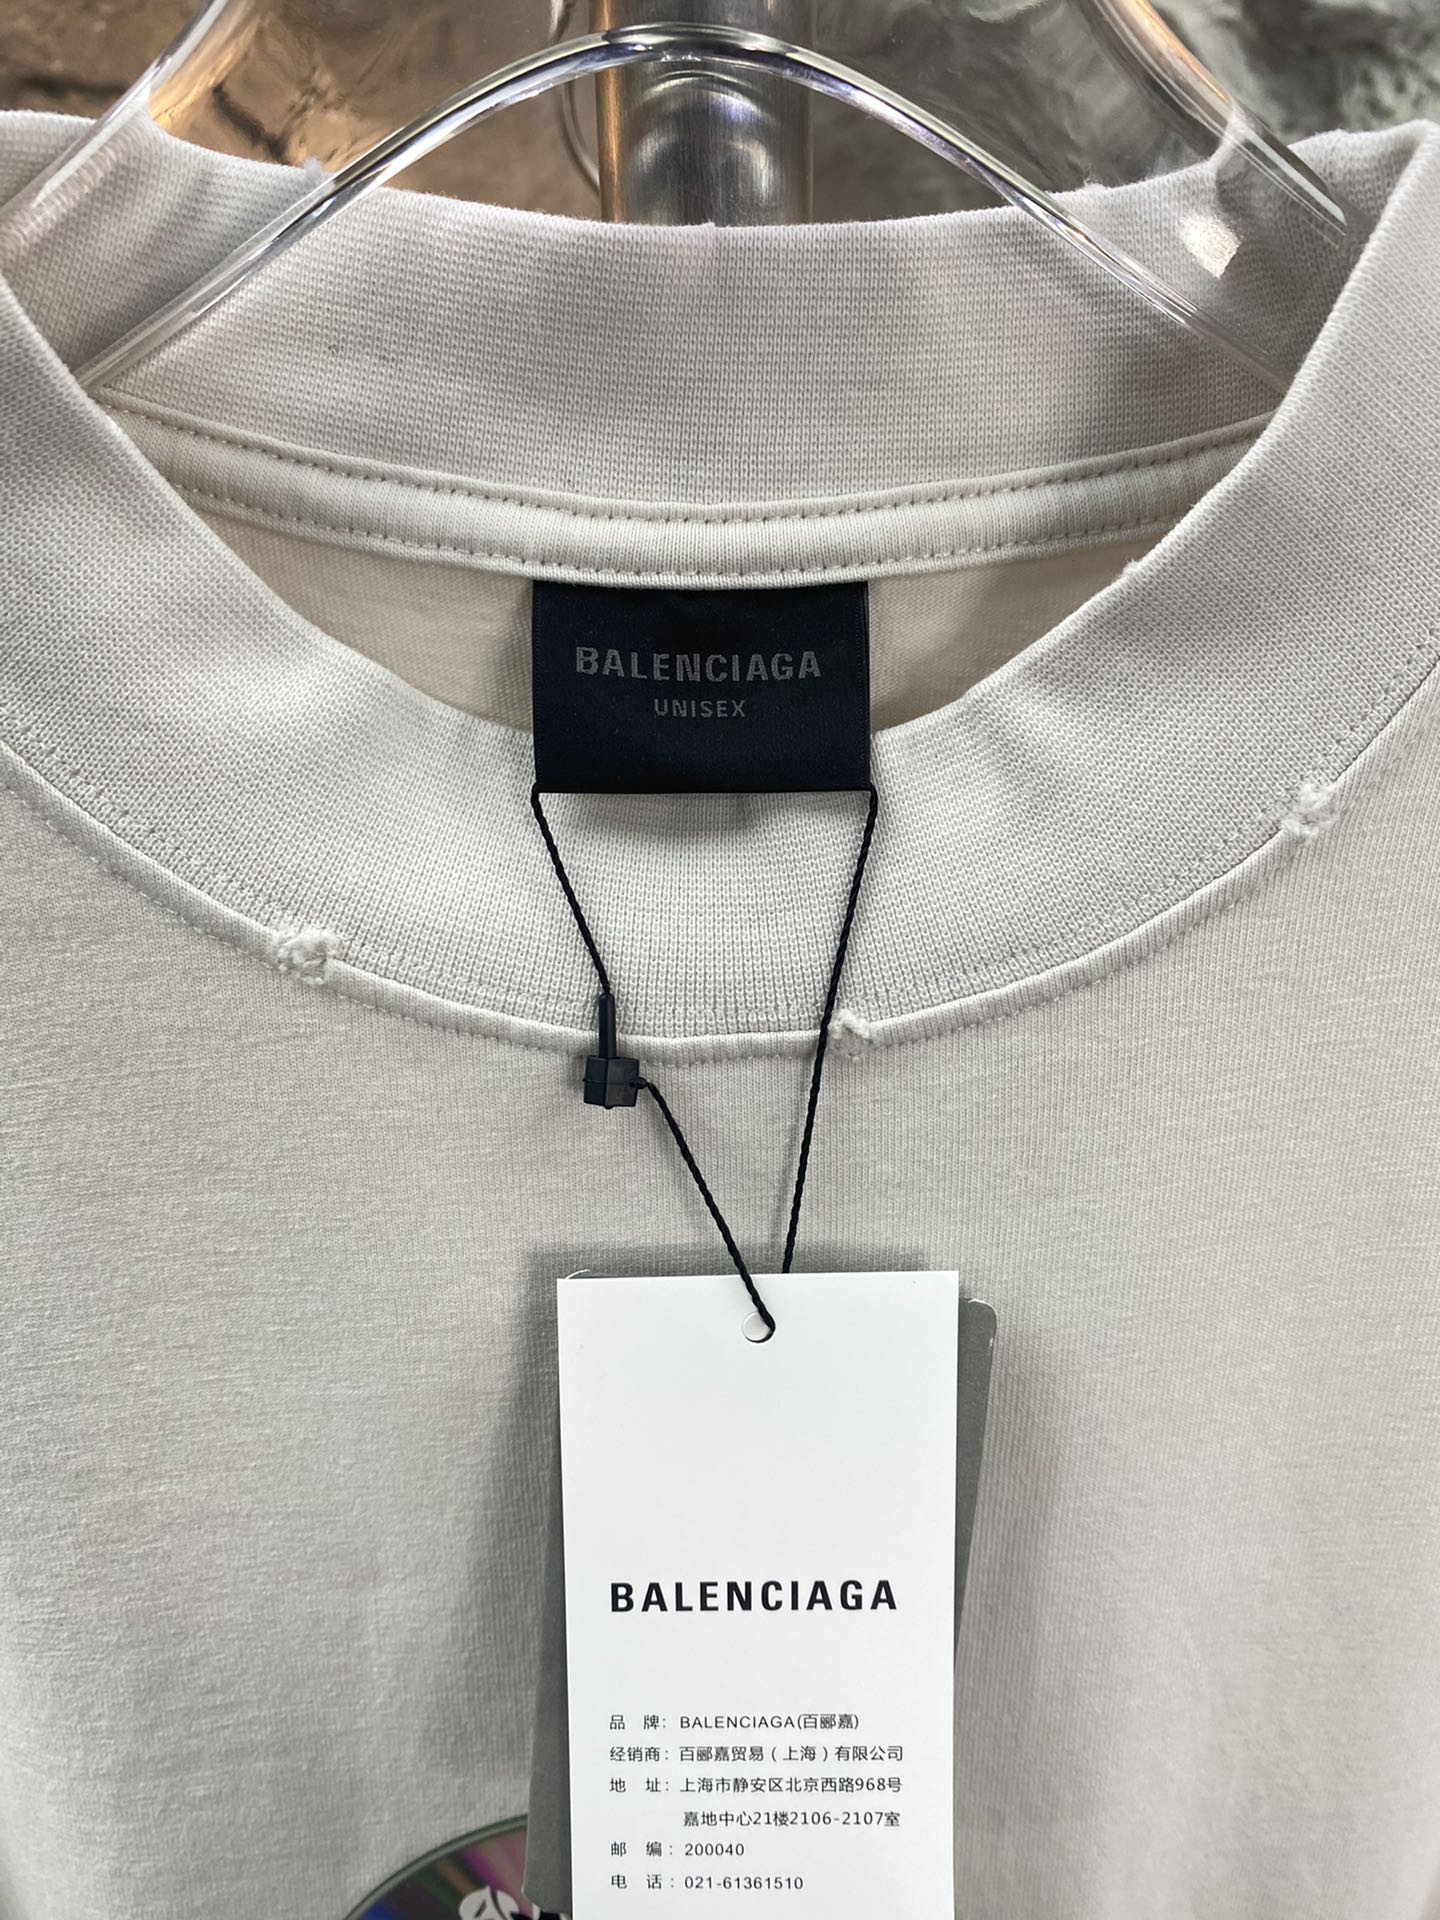 Balenciaga巴黎世家情人节限定CD光盘短袖TeeZP打板采用16S230G单纱精梳棉袖子以及下摆